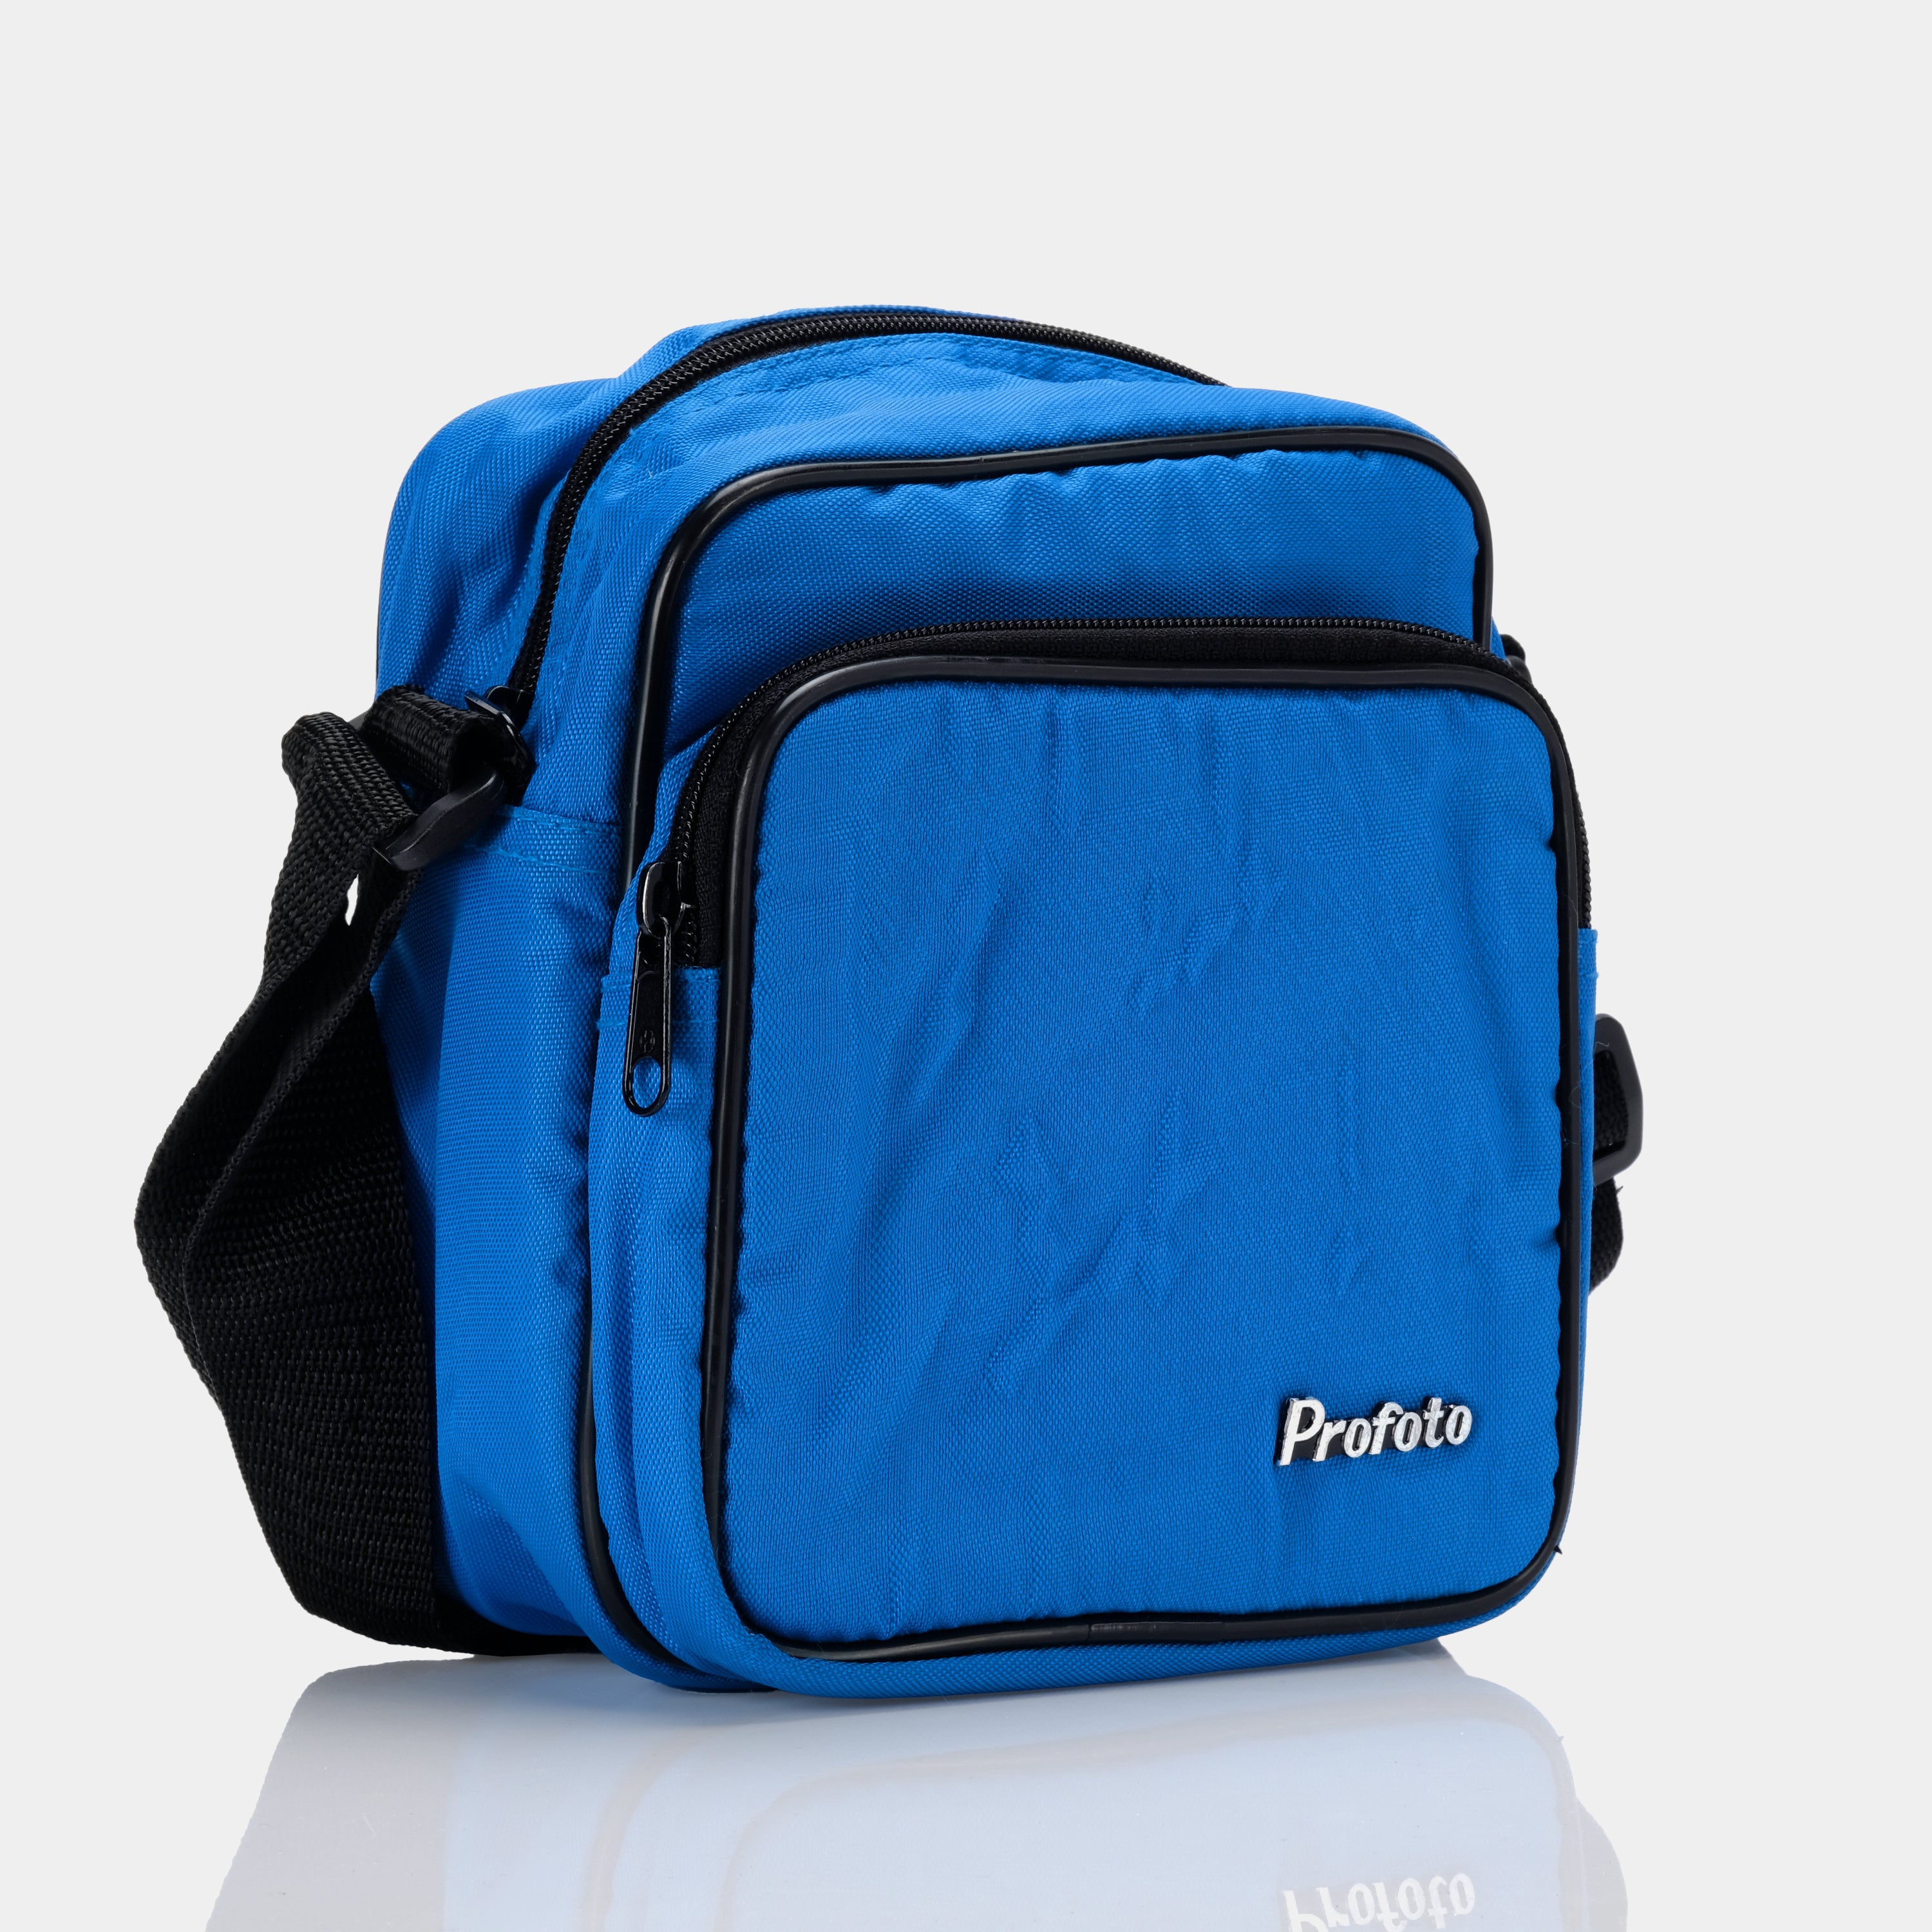 Profoto Blue Camera Bag